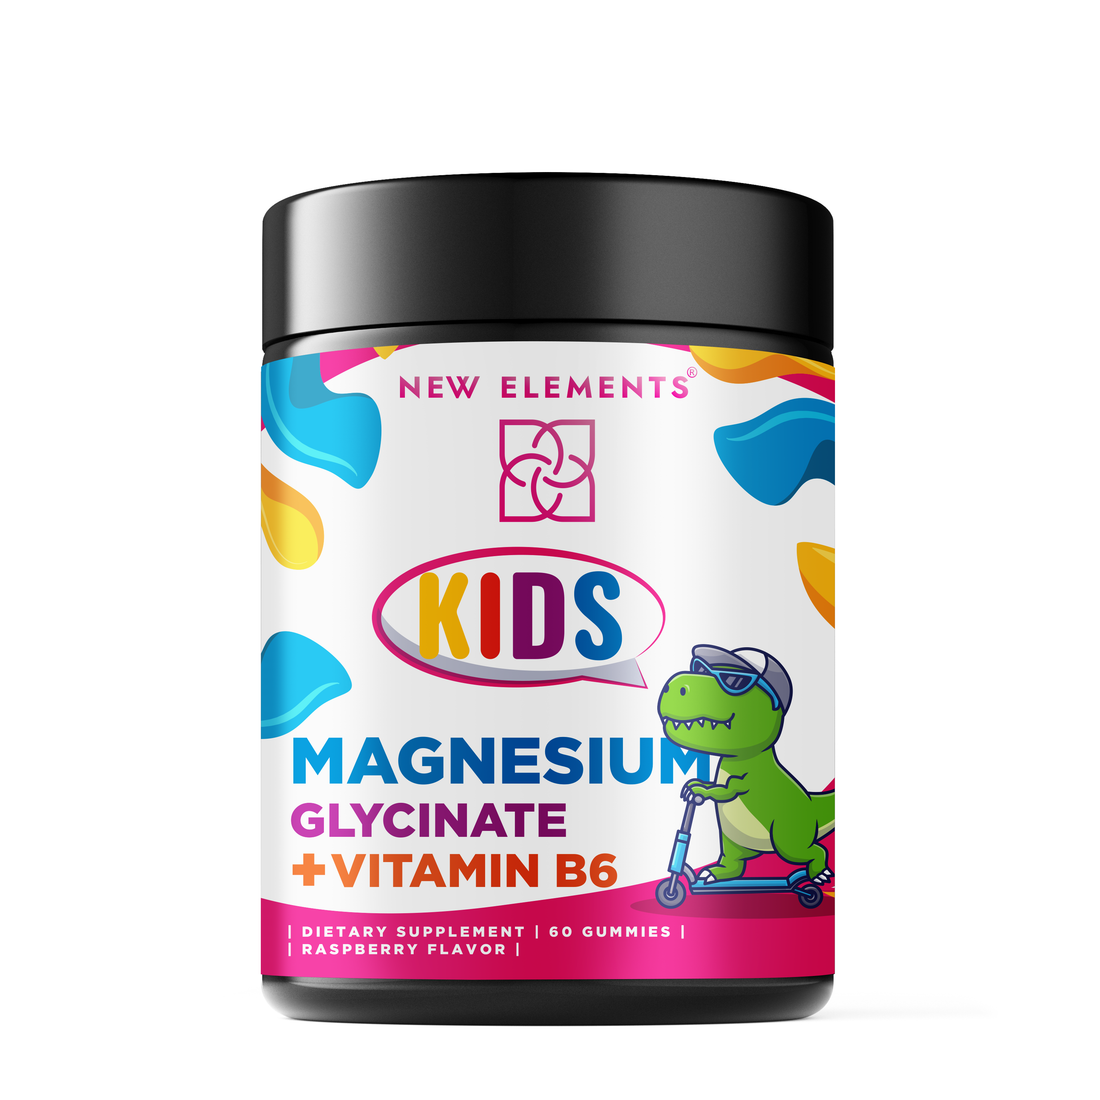 Magnesium Glycinate Gummies for Kids